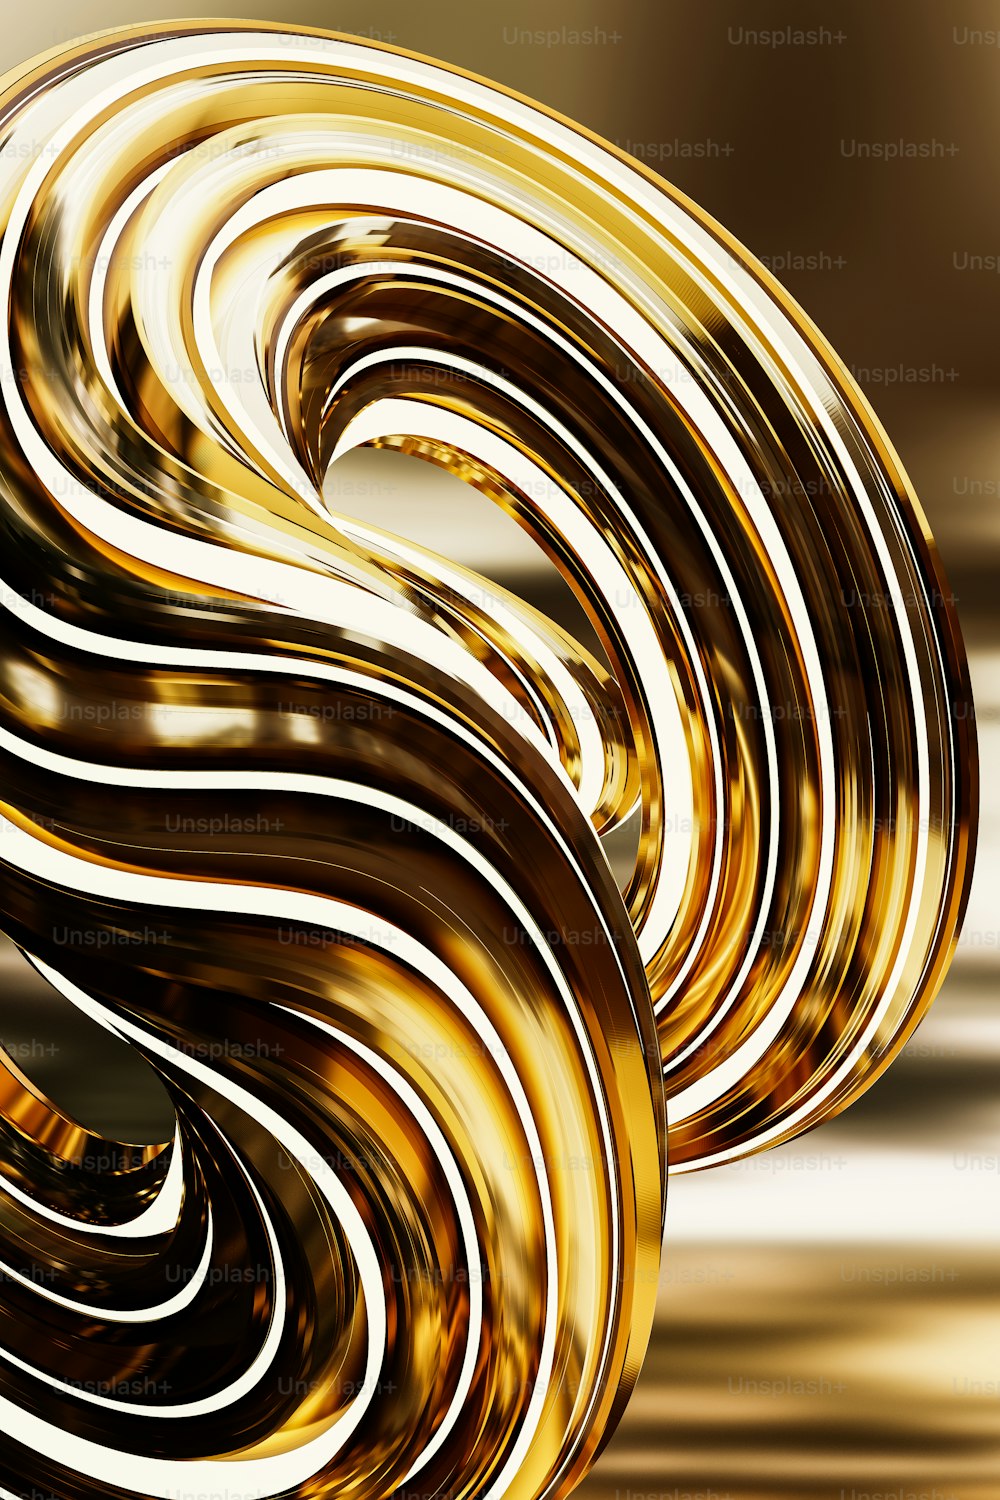 Un fondo dorado abstracto con un diseño en espiral